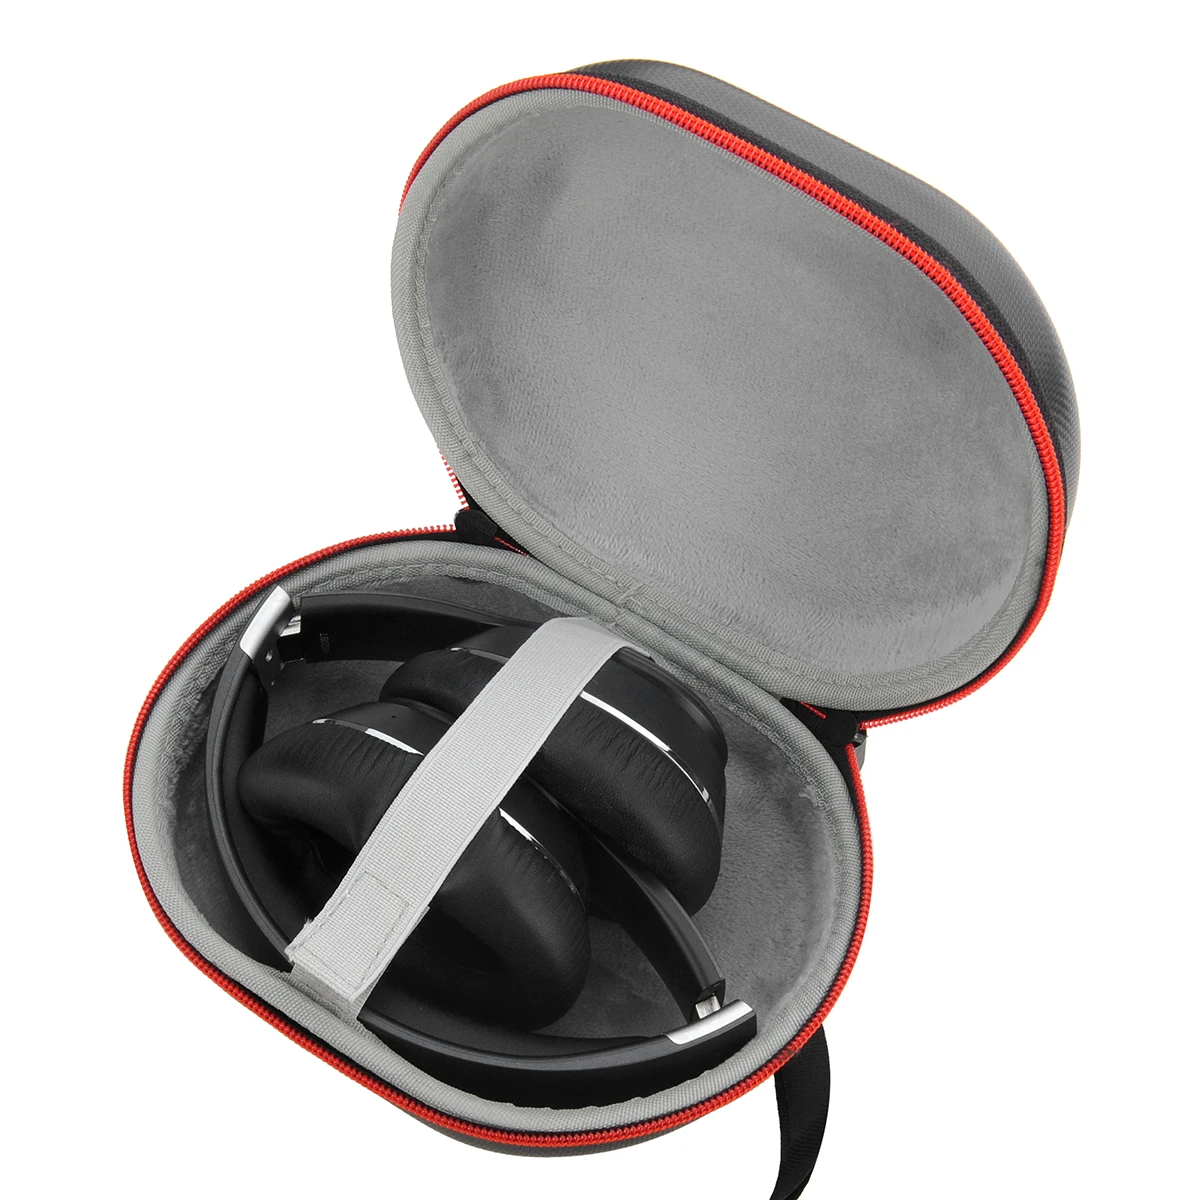 Hard EVA Case for Sony MDR-100ABN Beats Studio 2.0/3.0 Edifier W820BT Sennheiser MOMENTUM 3 Headphone Storage bags for QCY H3 H4